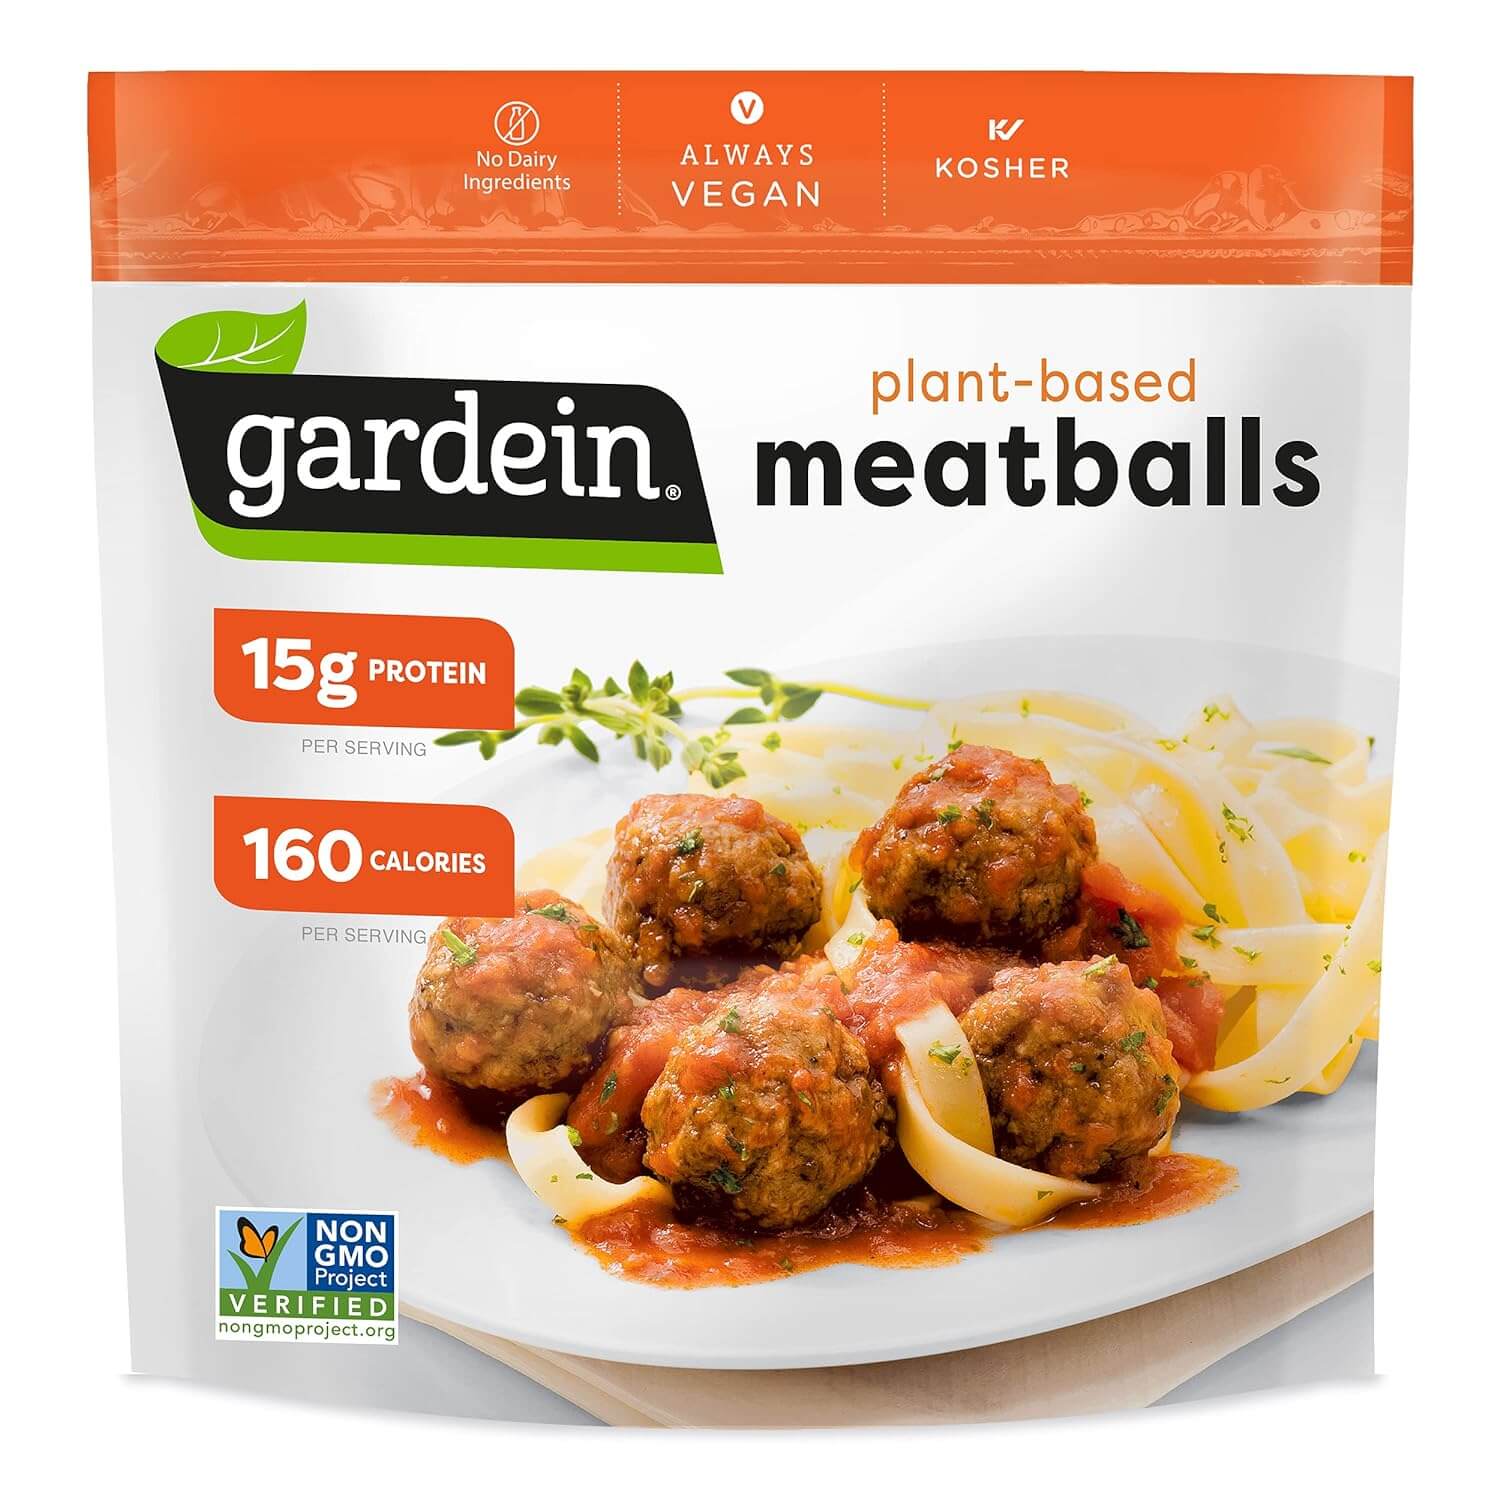 Gardein’s Meatless Meatballs